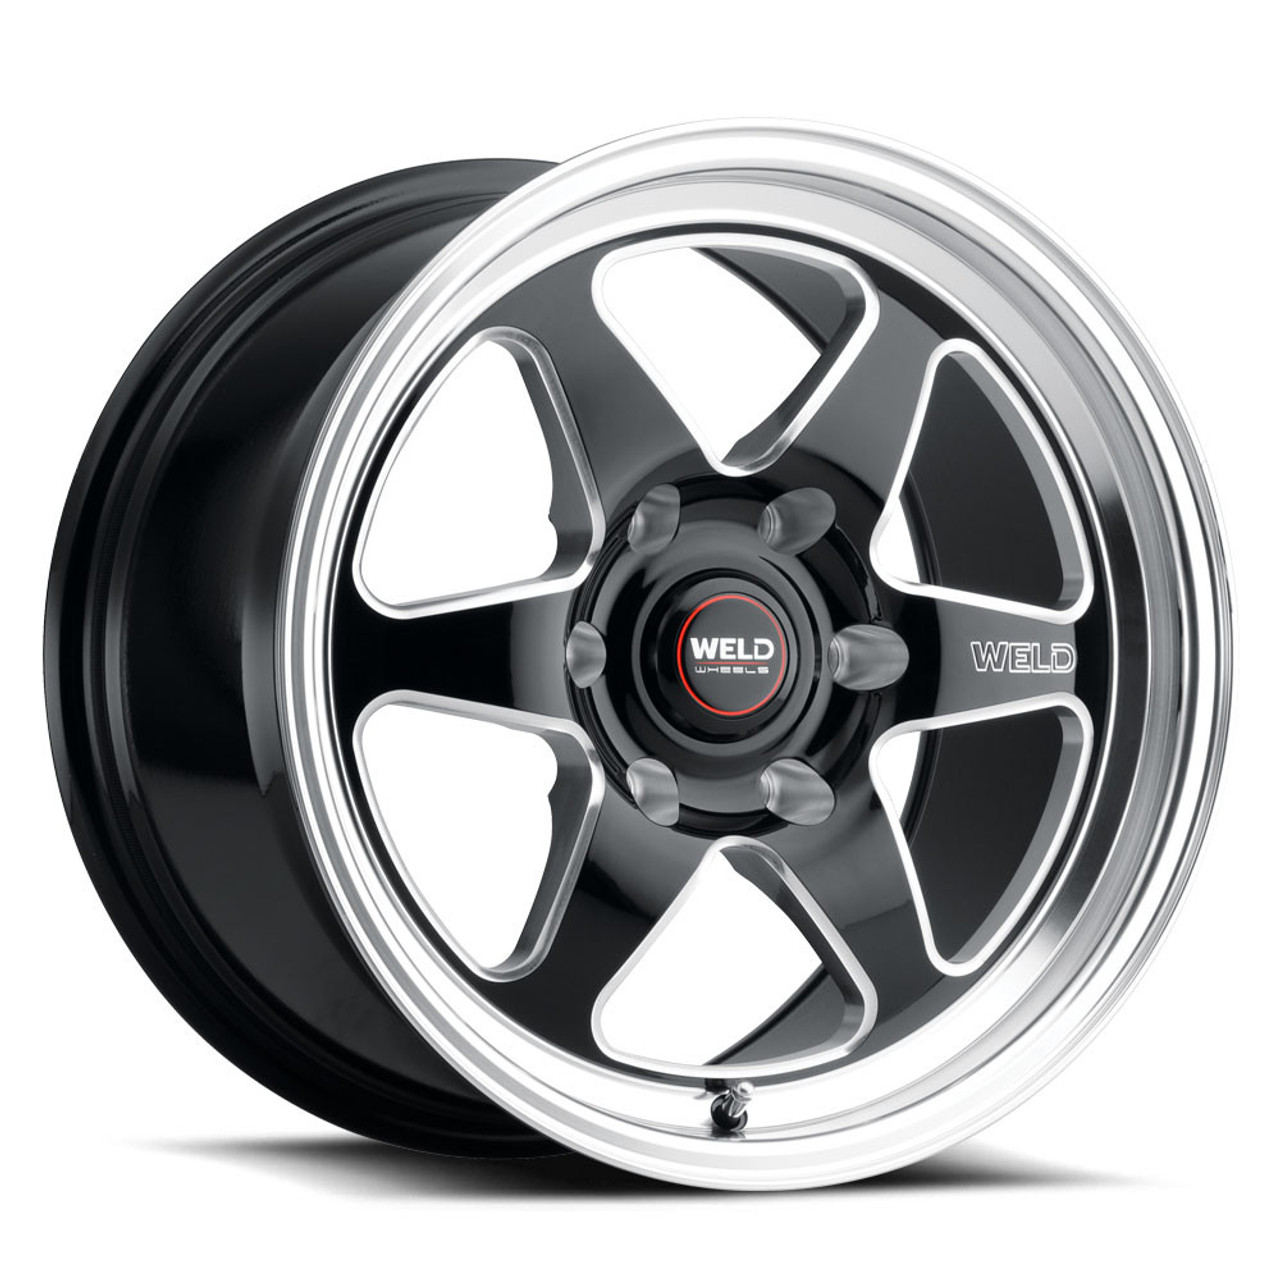 WELD Silverado Sierra Ventura Drag Gloss Black Wheel with Milled Spokes  17x10 6x139.7 BC (6x5.5) +25 Offset 6.50 Backspacing S15670084P25